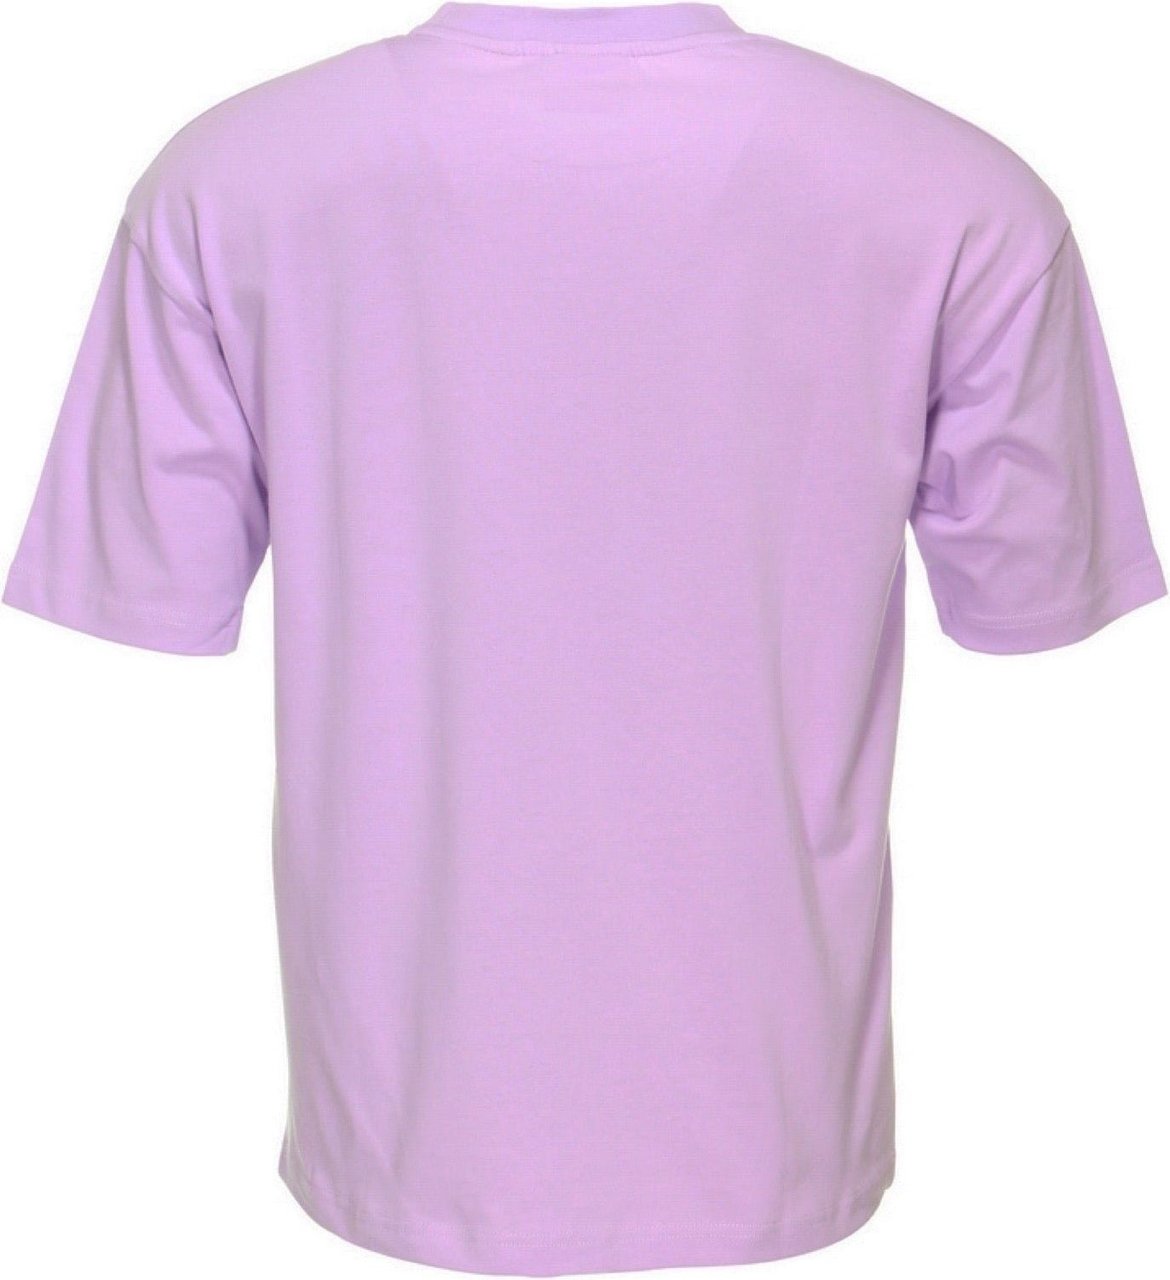 Seaside Seaside Esntls T-shirt Purple Paars